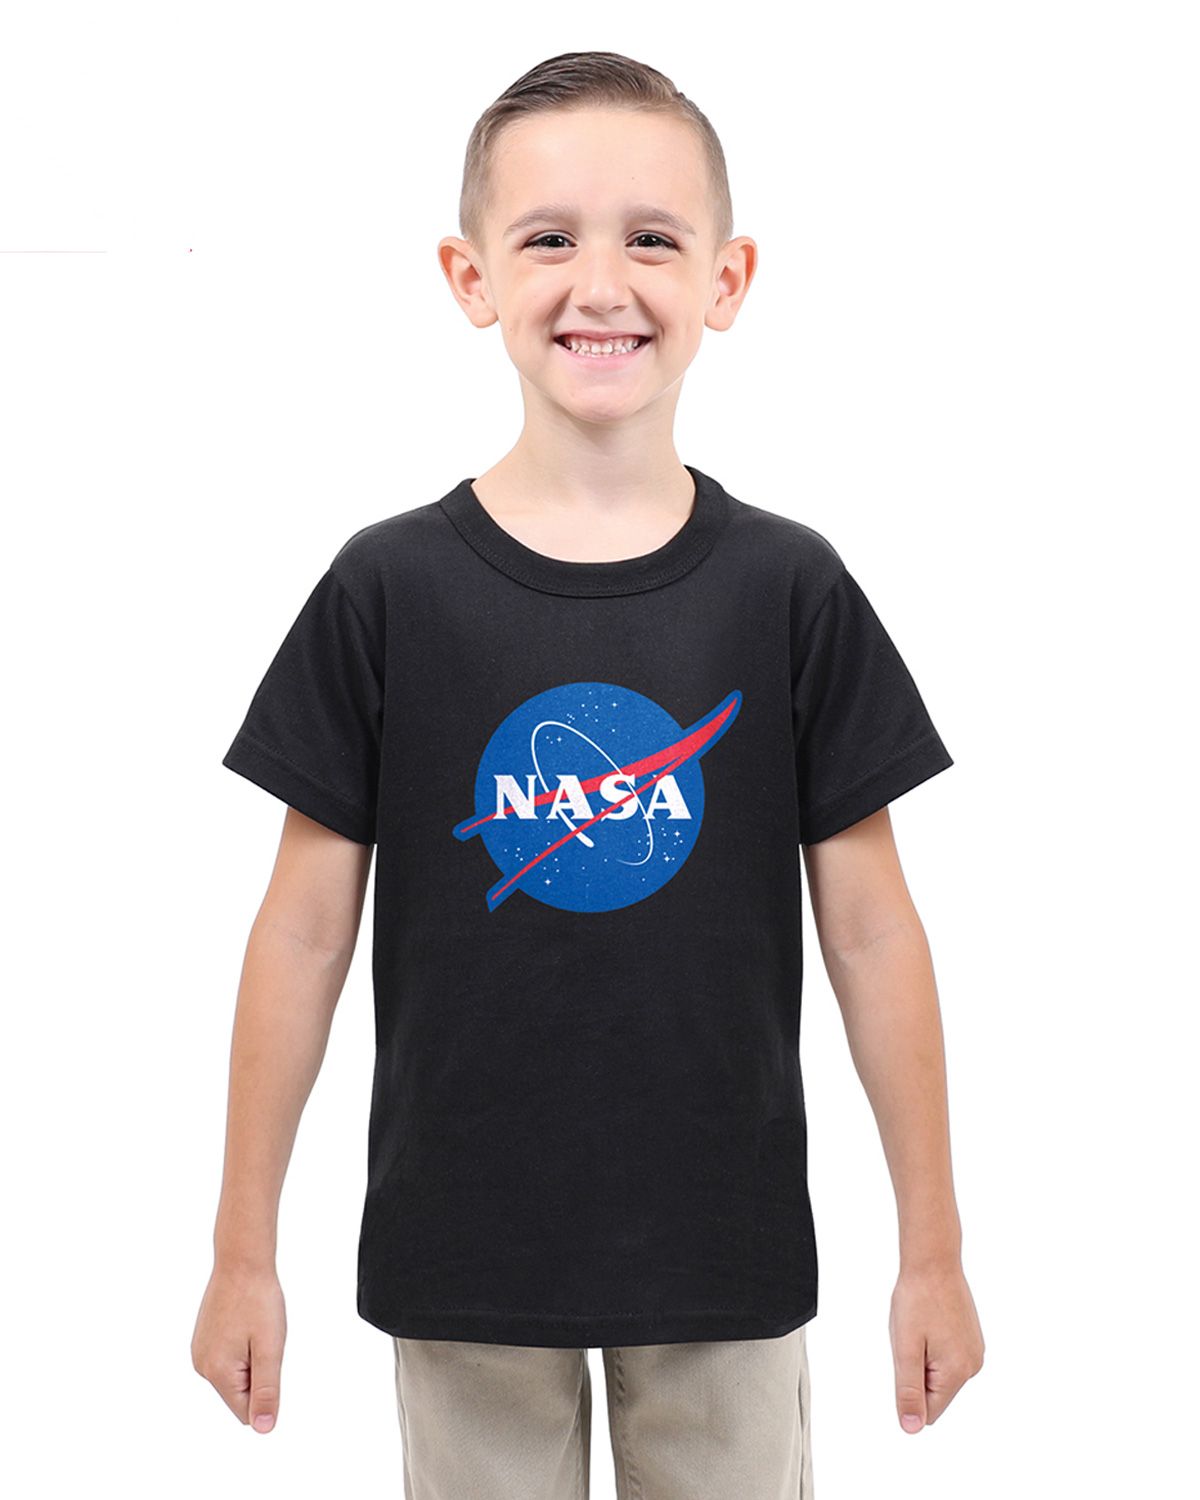 Rothco NASA Meatball Logo T-Shirt Black Tee with Red/White/Blue NASA Logo